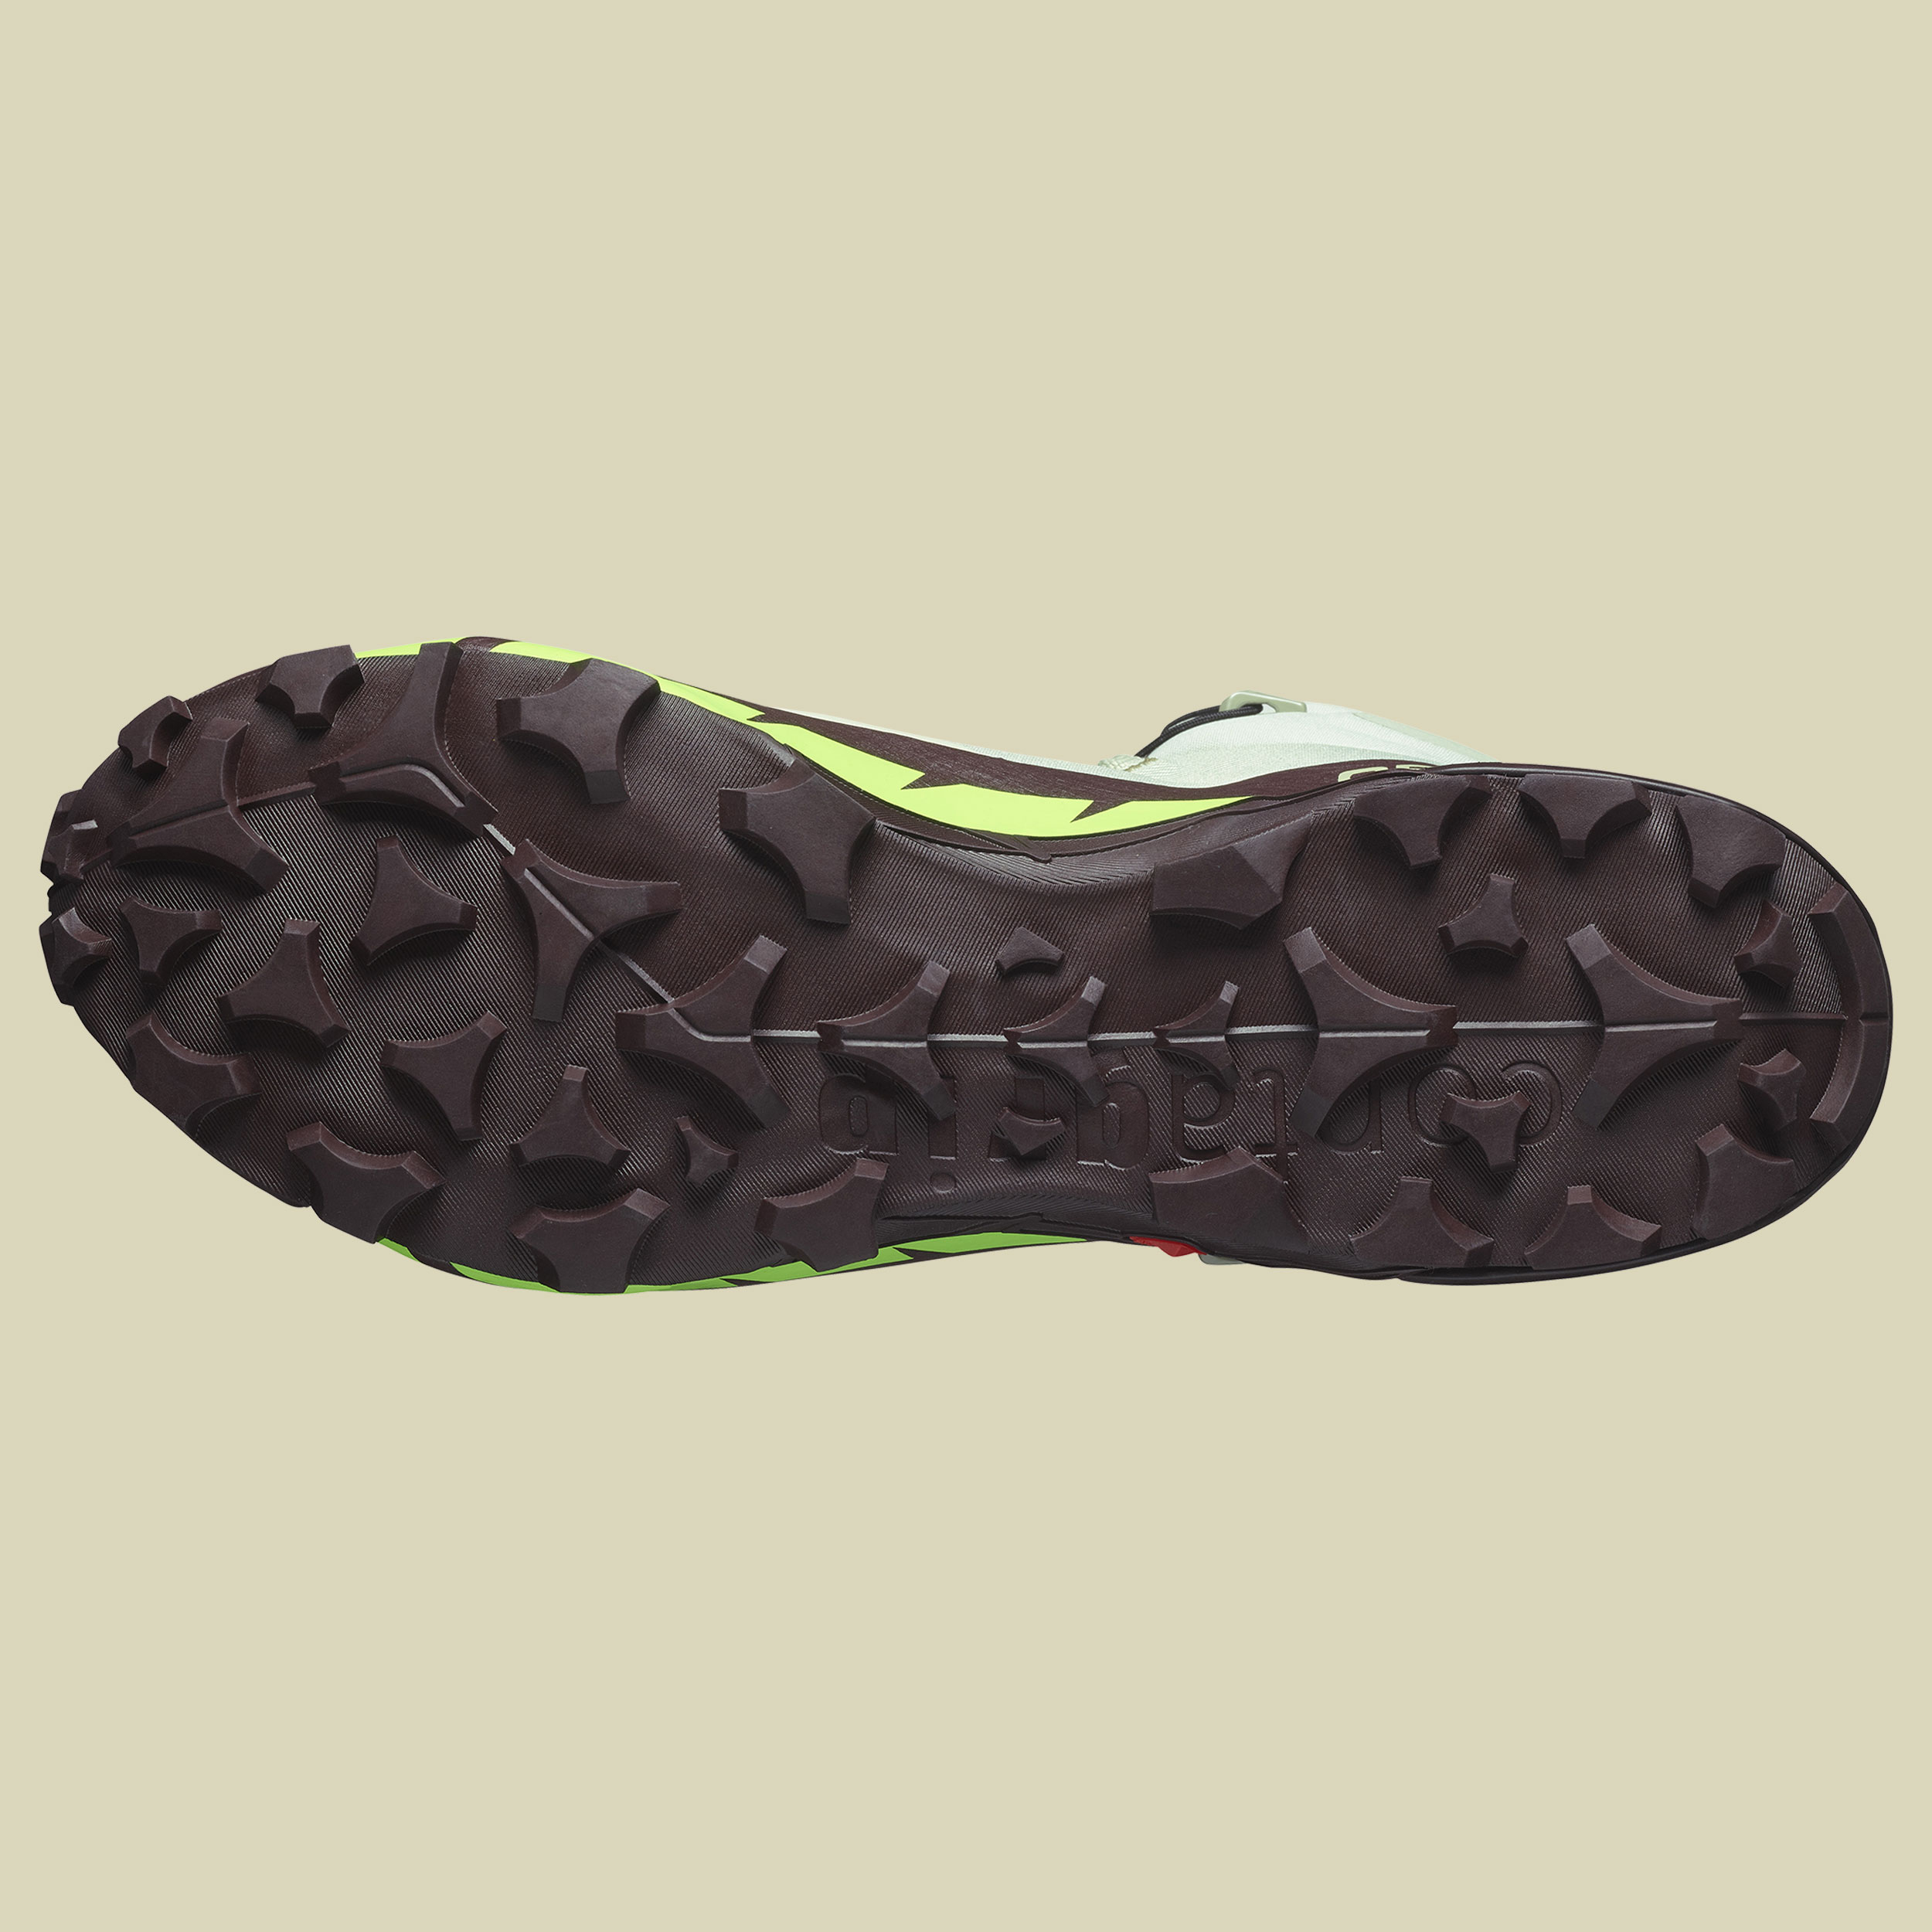 Cross Hike Mid GTX 2 Men Größe UK 8 Farbe desert sage/green gecko/chocolate plum